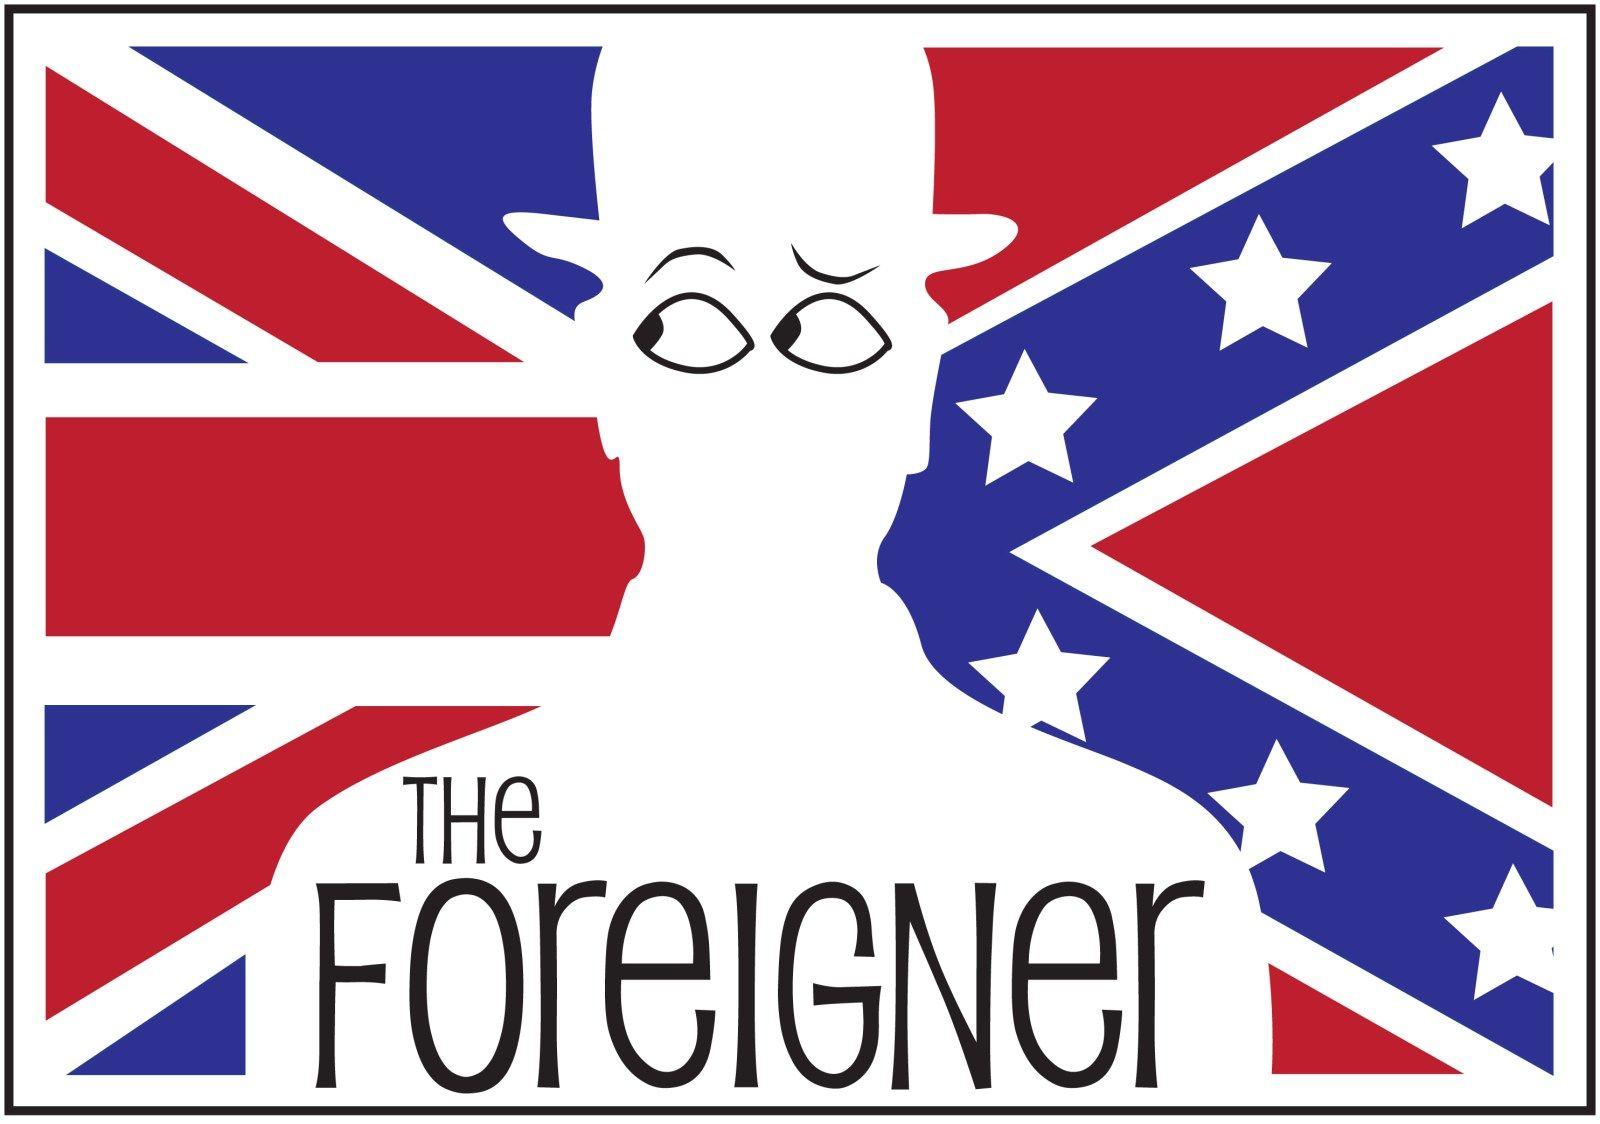 Foreigner Logo - The Foreigner Logo